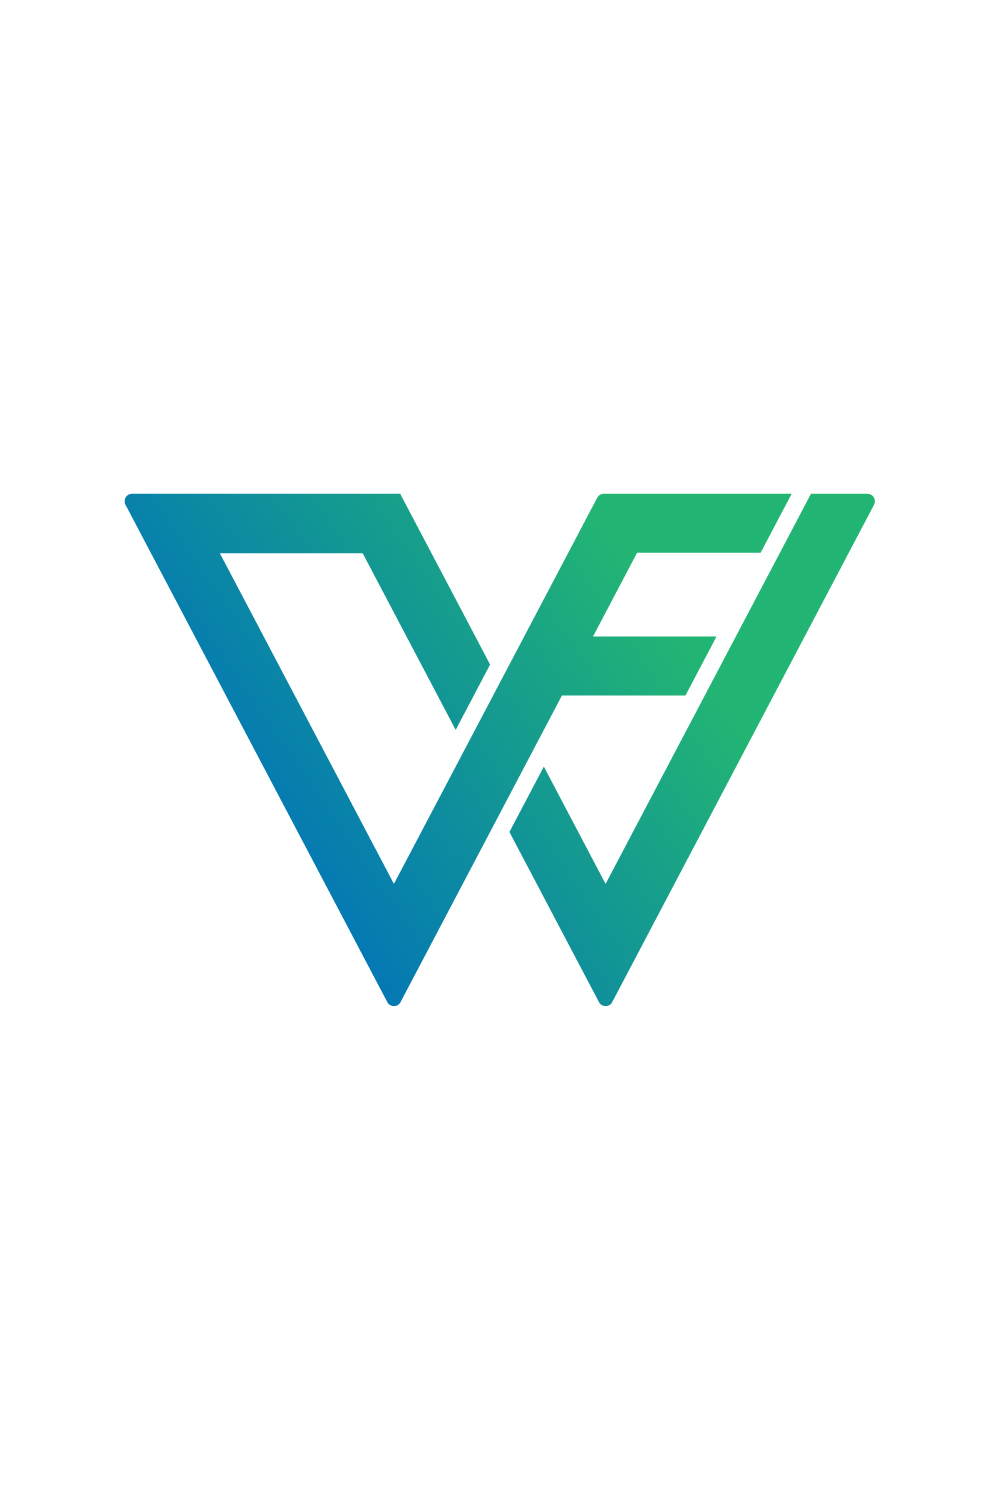 WF logo design pinterest preview image.